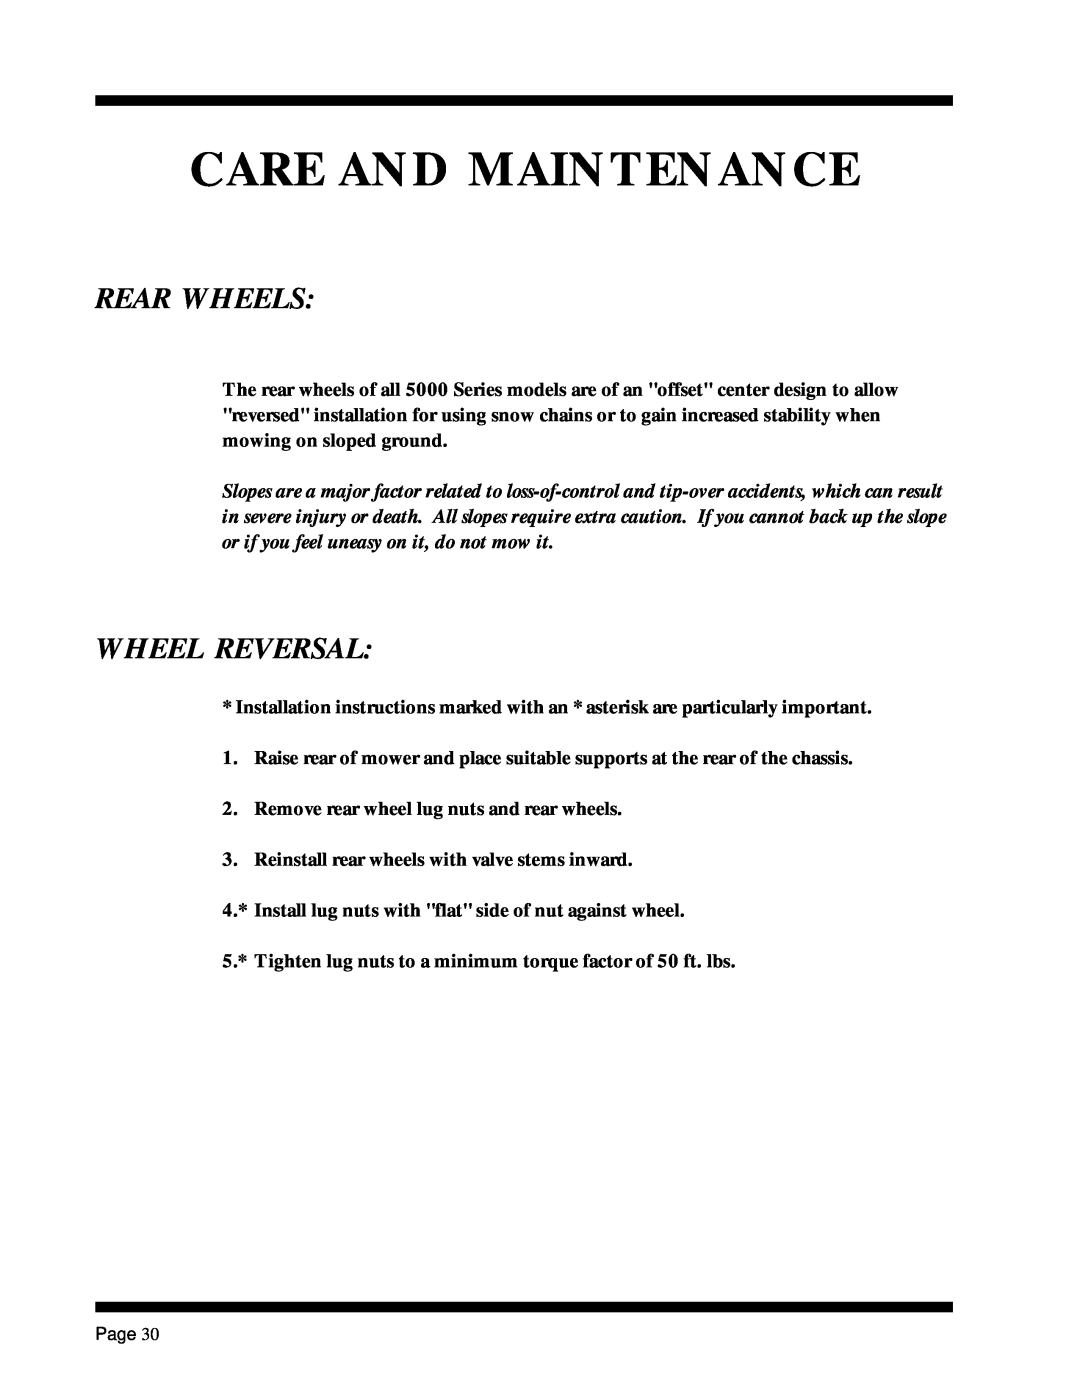 Dixon ZTR 5017Twin manual Rear Wheels, Wheel Reversal, Care And Maintenance 